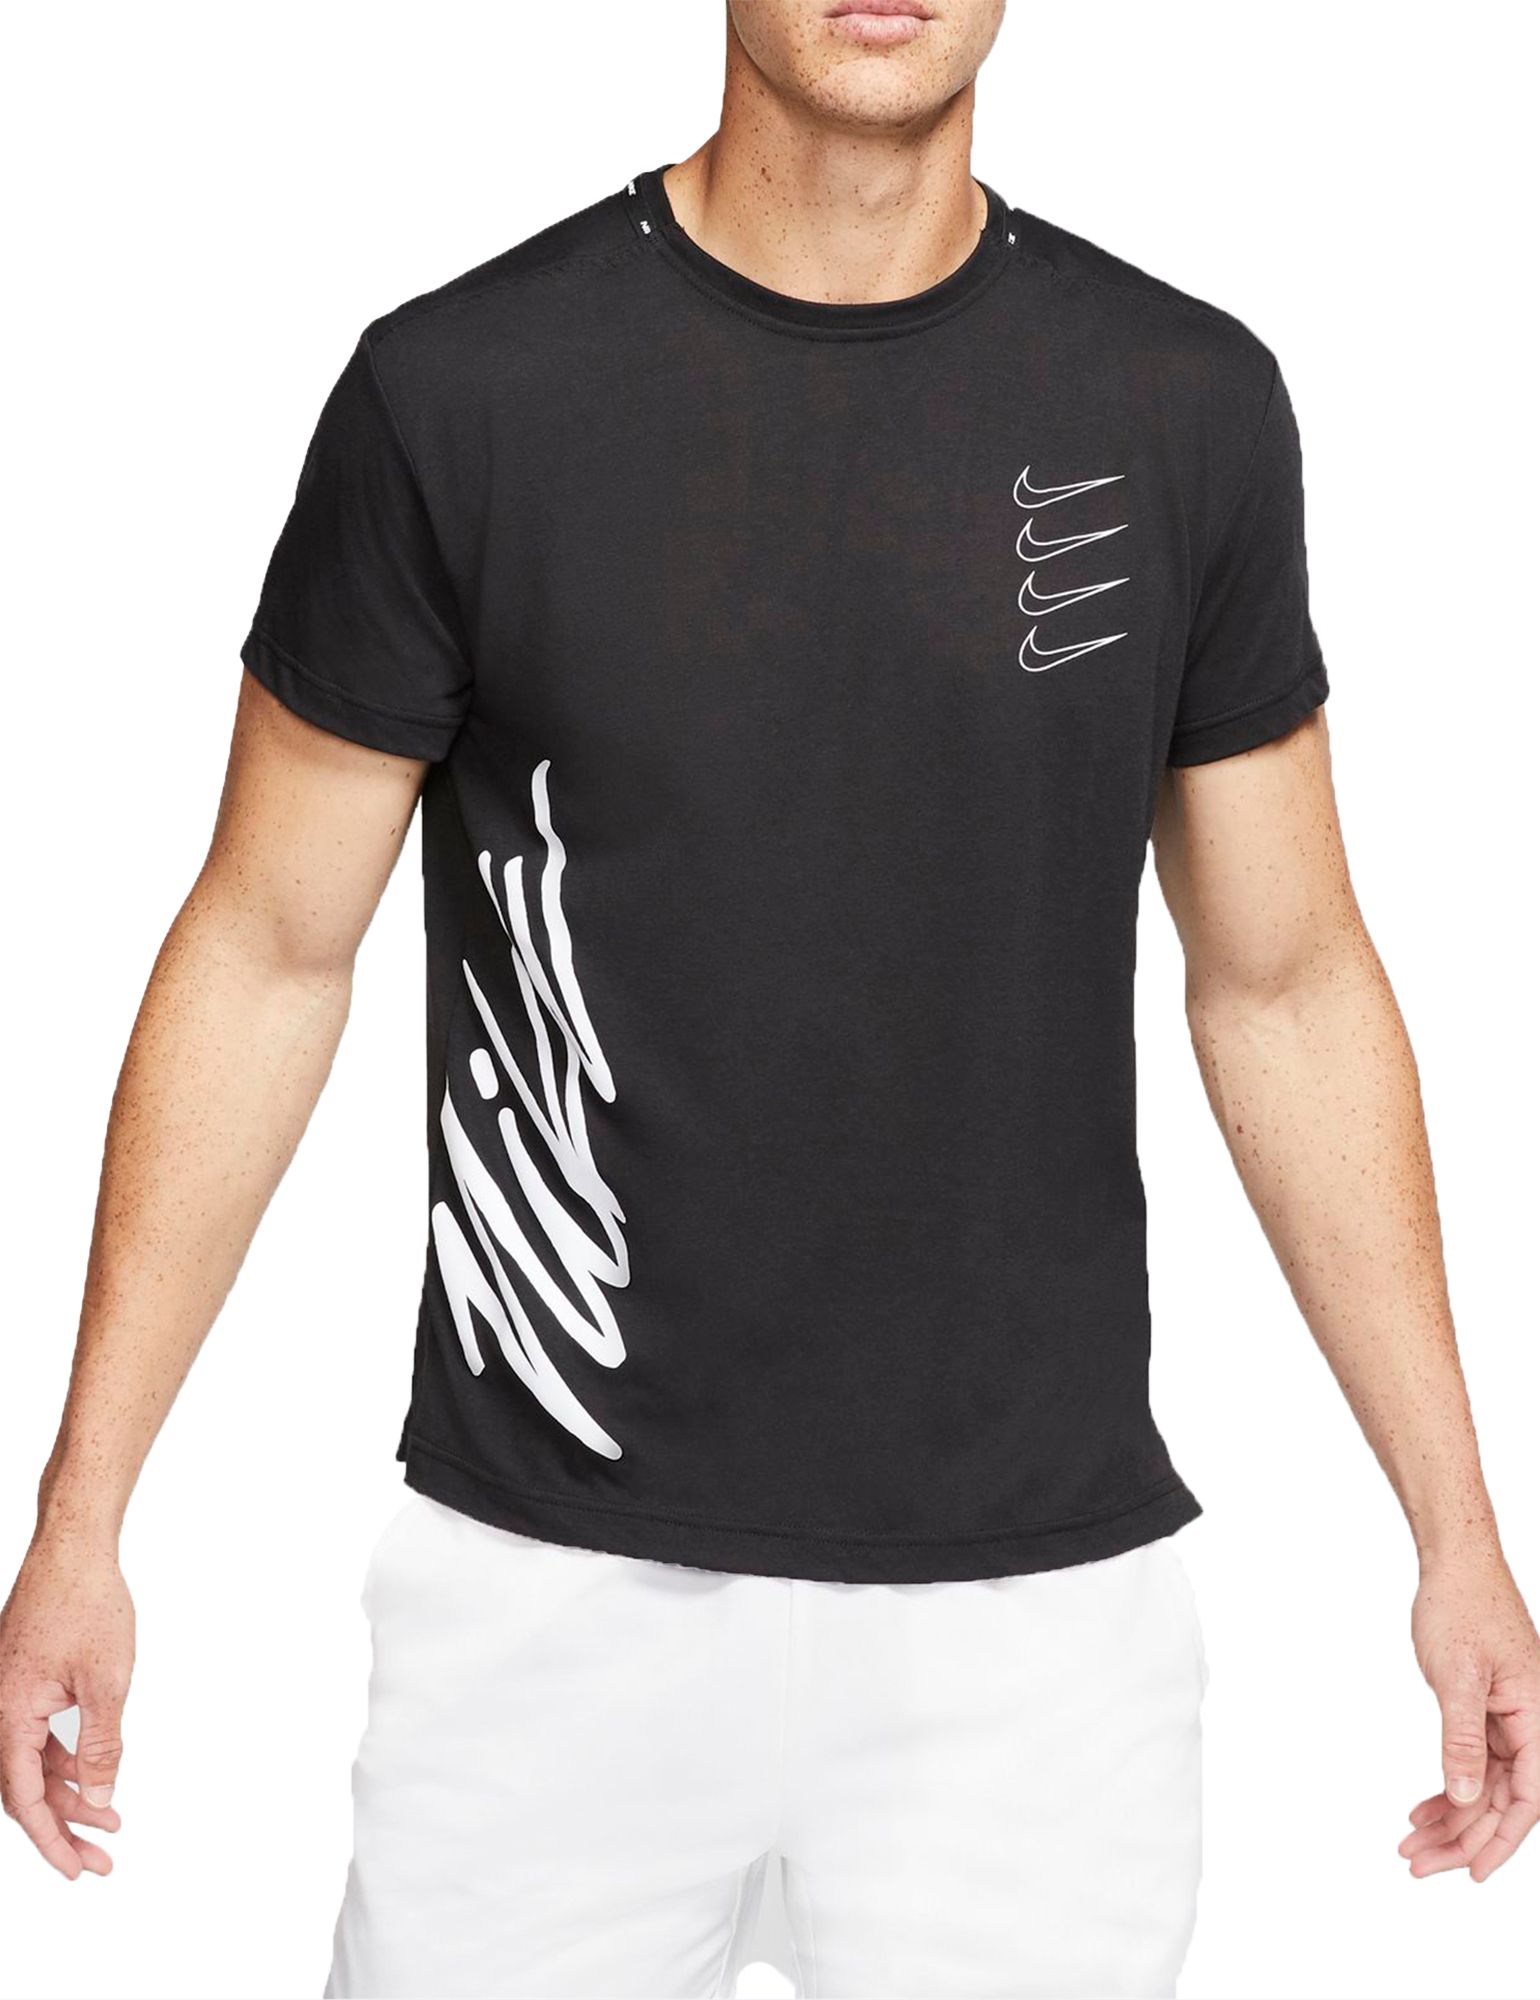 Nike Men's Dri-FIT Short Sleeve Training T-Shirt - .00